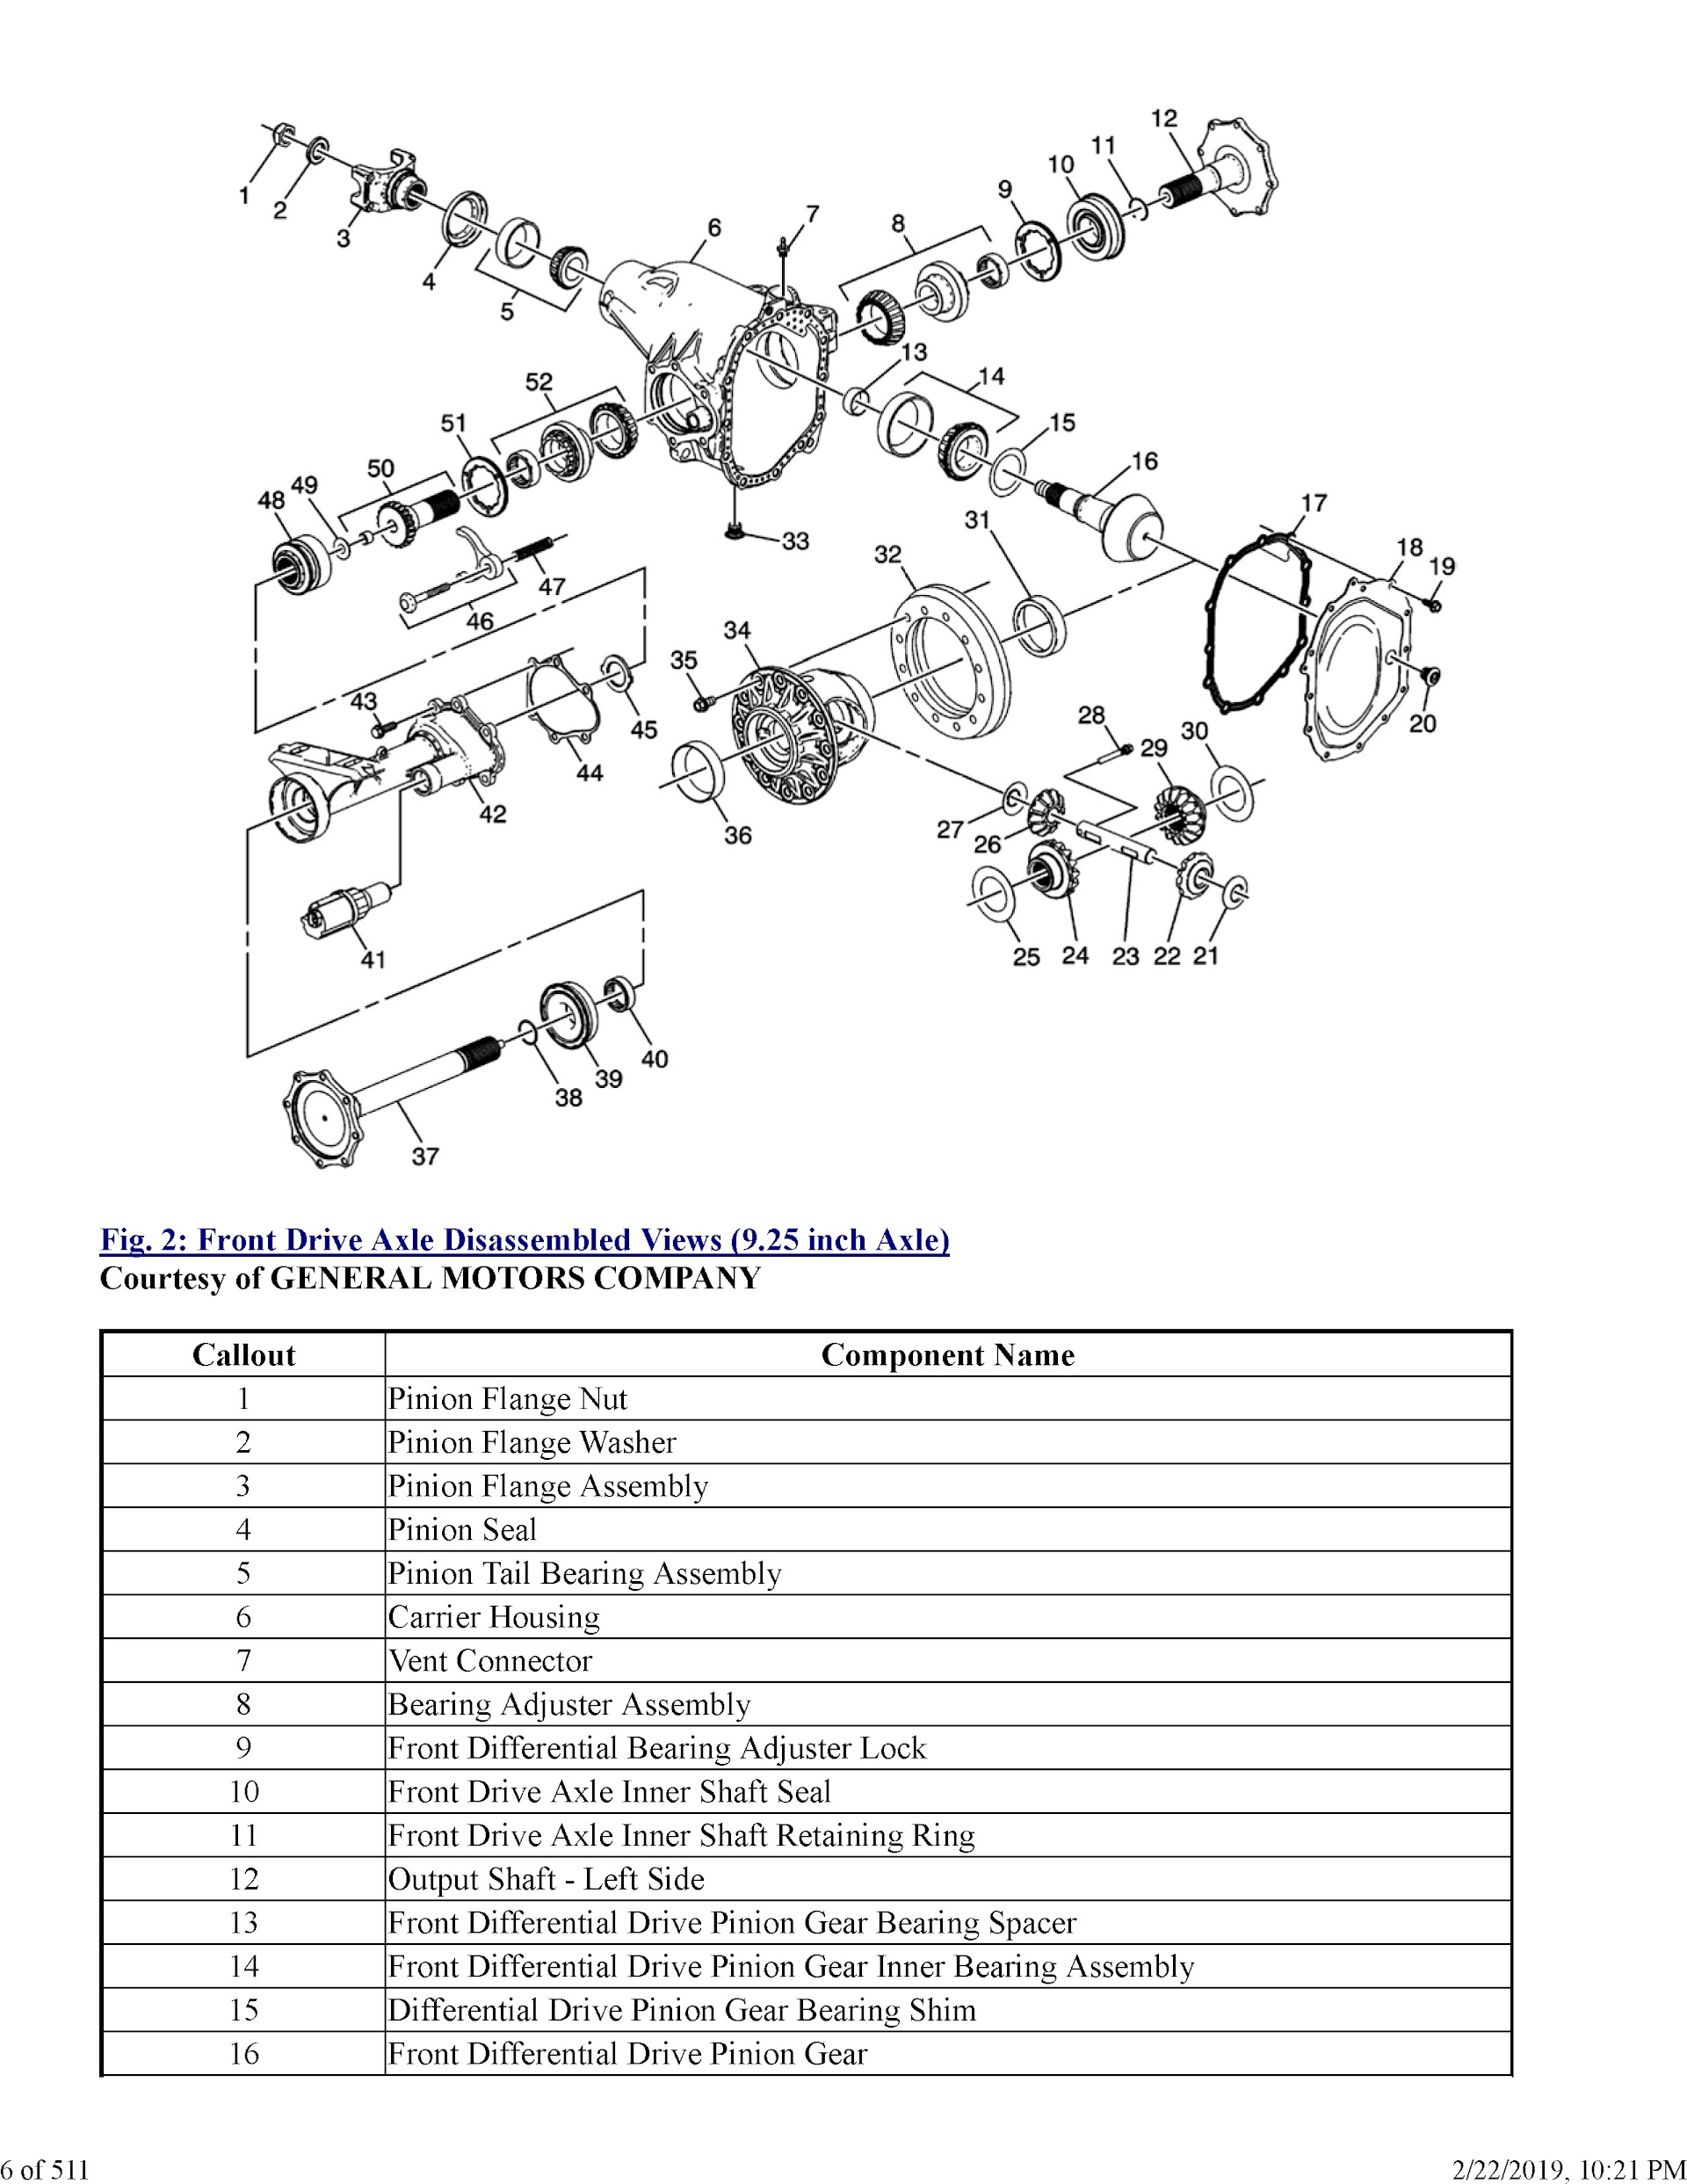 2016-2018 Chevrolet Silverado Repair Manual and GMC Sierra, front drive axle components